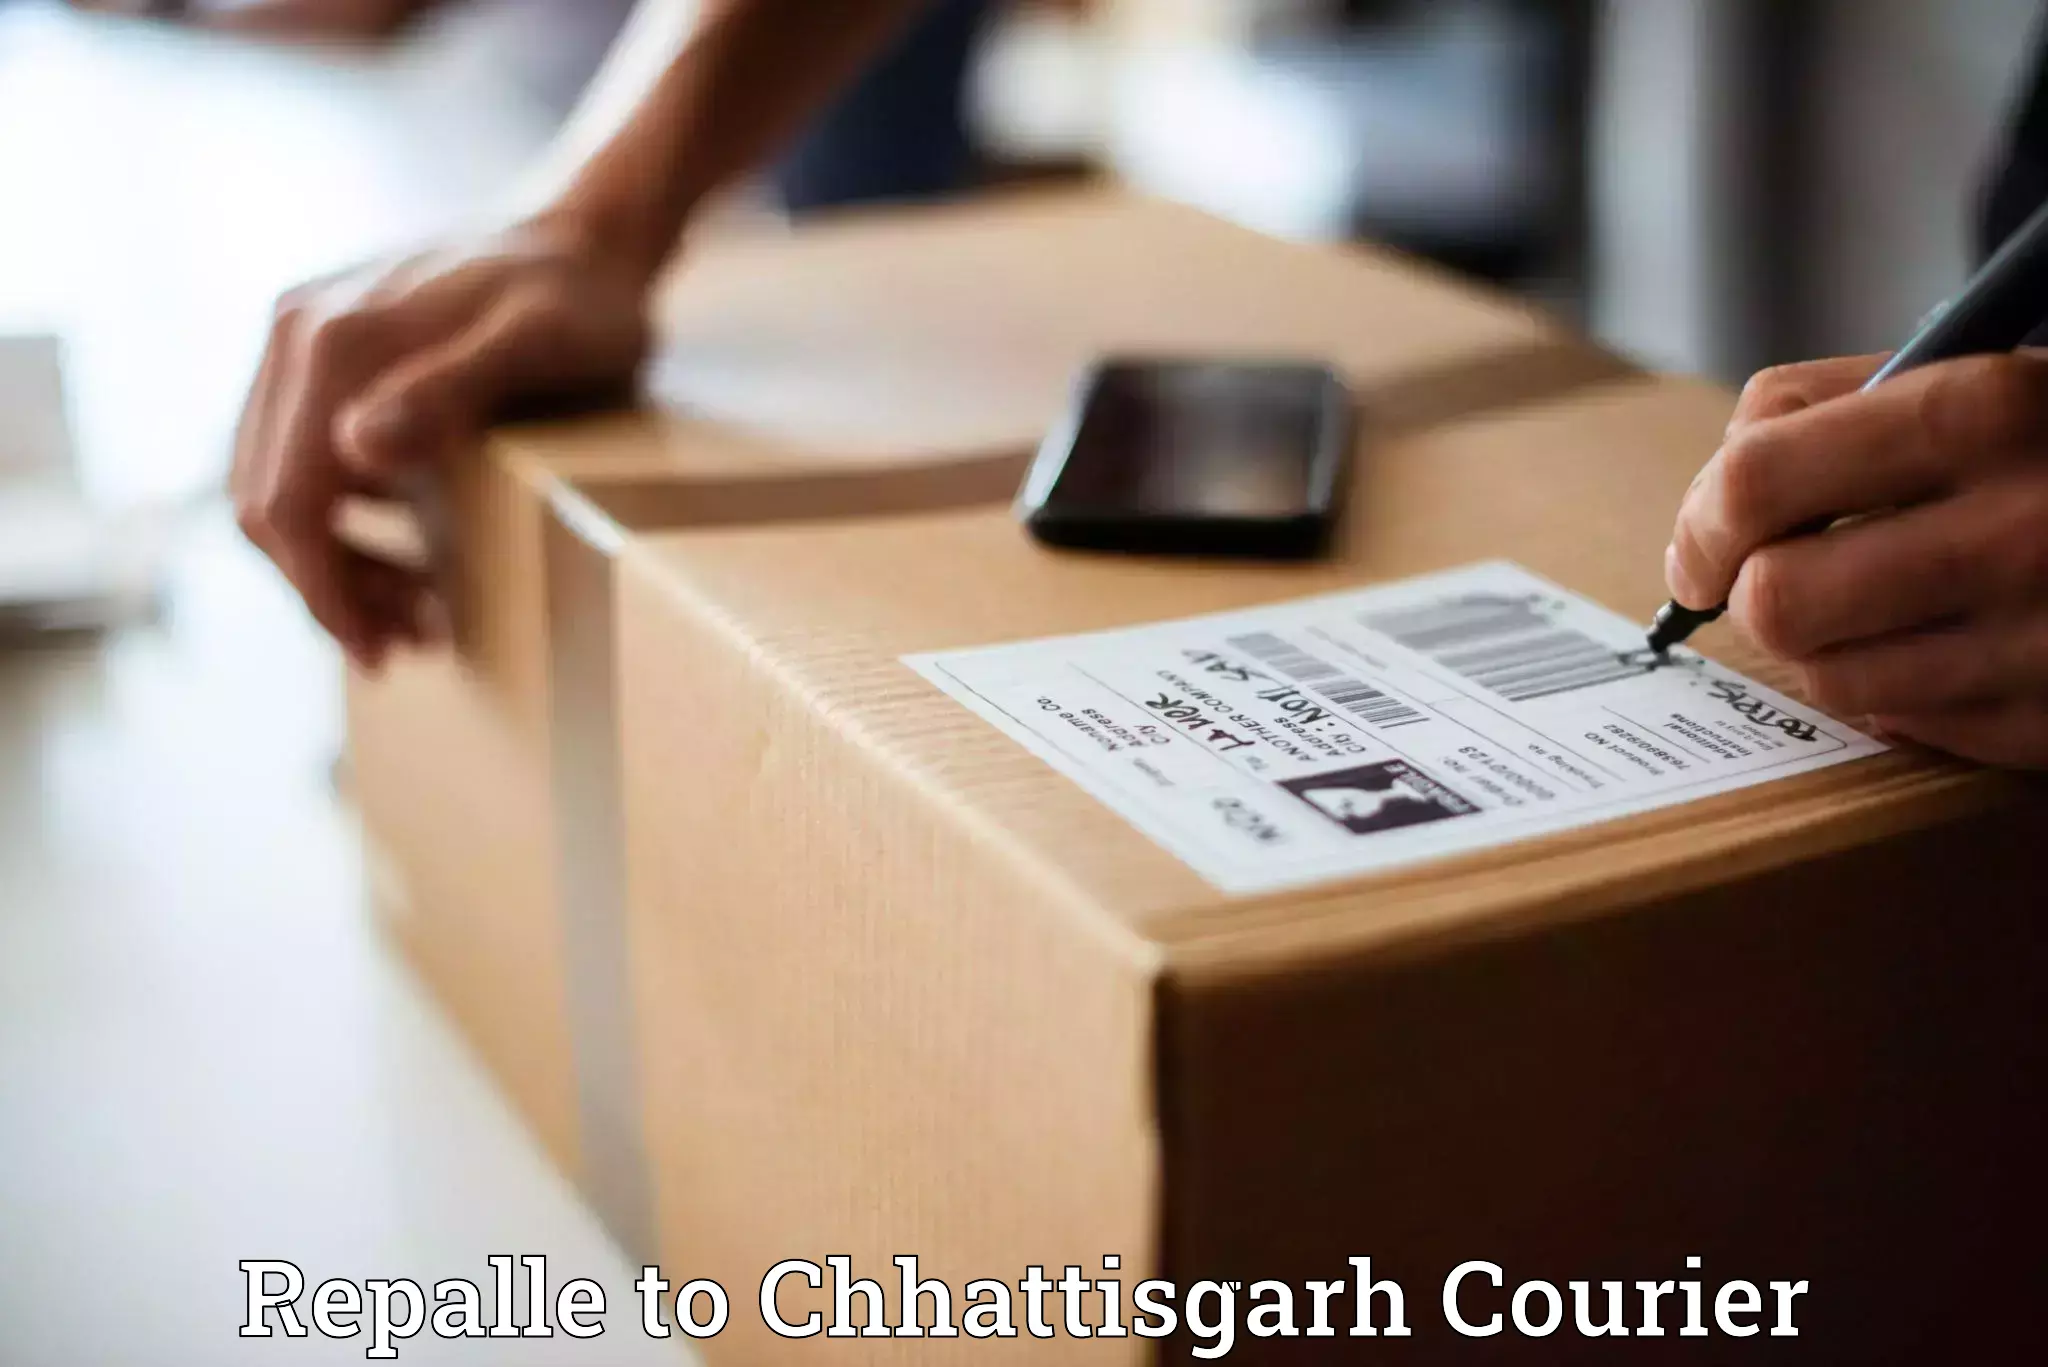 Custom courier packaging Repalle to Chhattisgarh